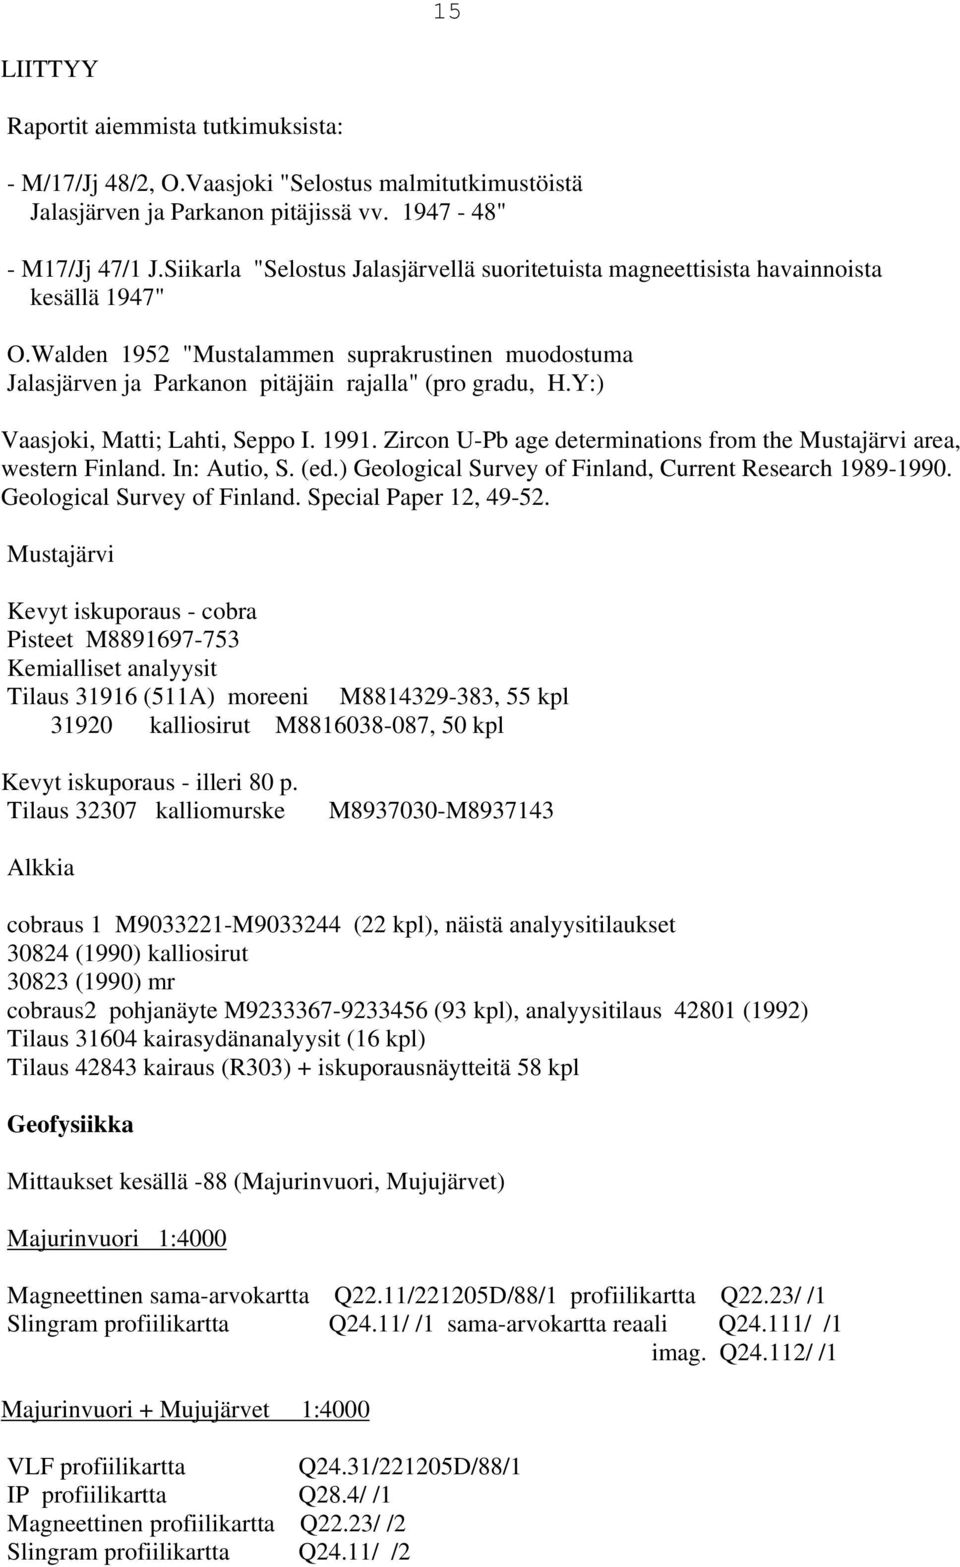 Y:) Vaasjoki, Matti; Lahti, Seppo I. 1991. Zircon U-Pb age determinations from the Mustajärvi area, western Finland. In: Autio, S. (ed.) Geological Survey of Finland, Current Research 1989-1990.